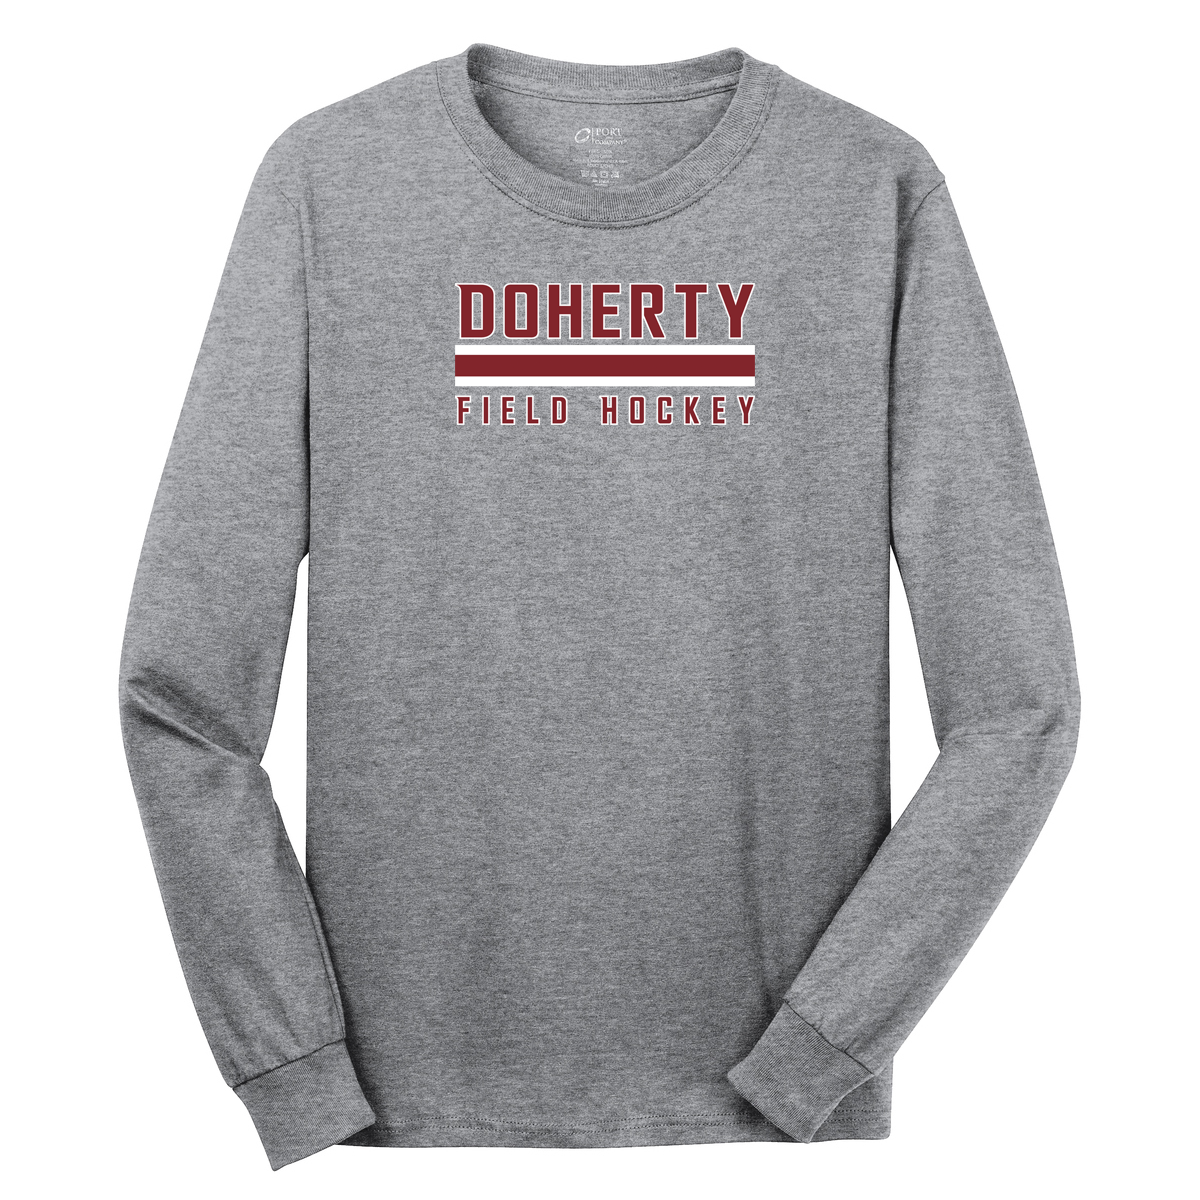 Doherty Field Hockey Cotton Long Sleeve Shirt